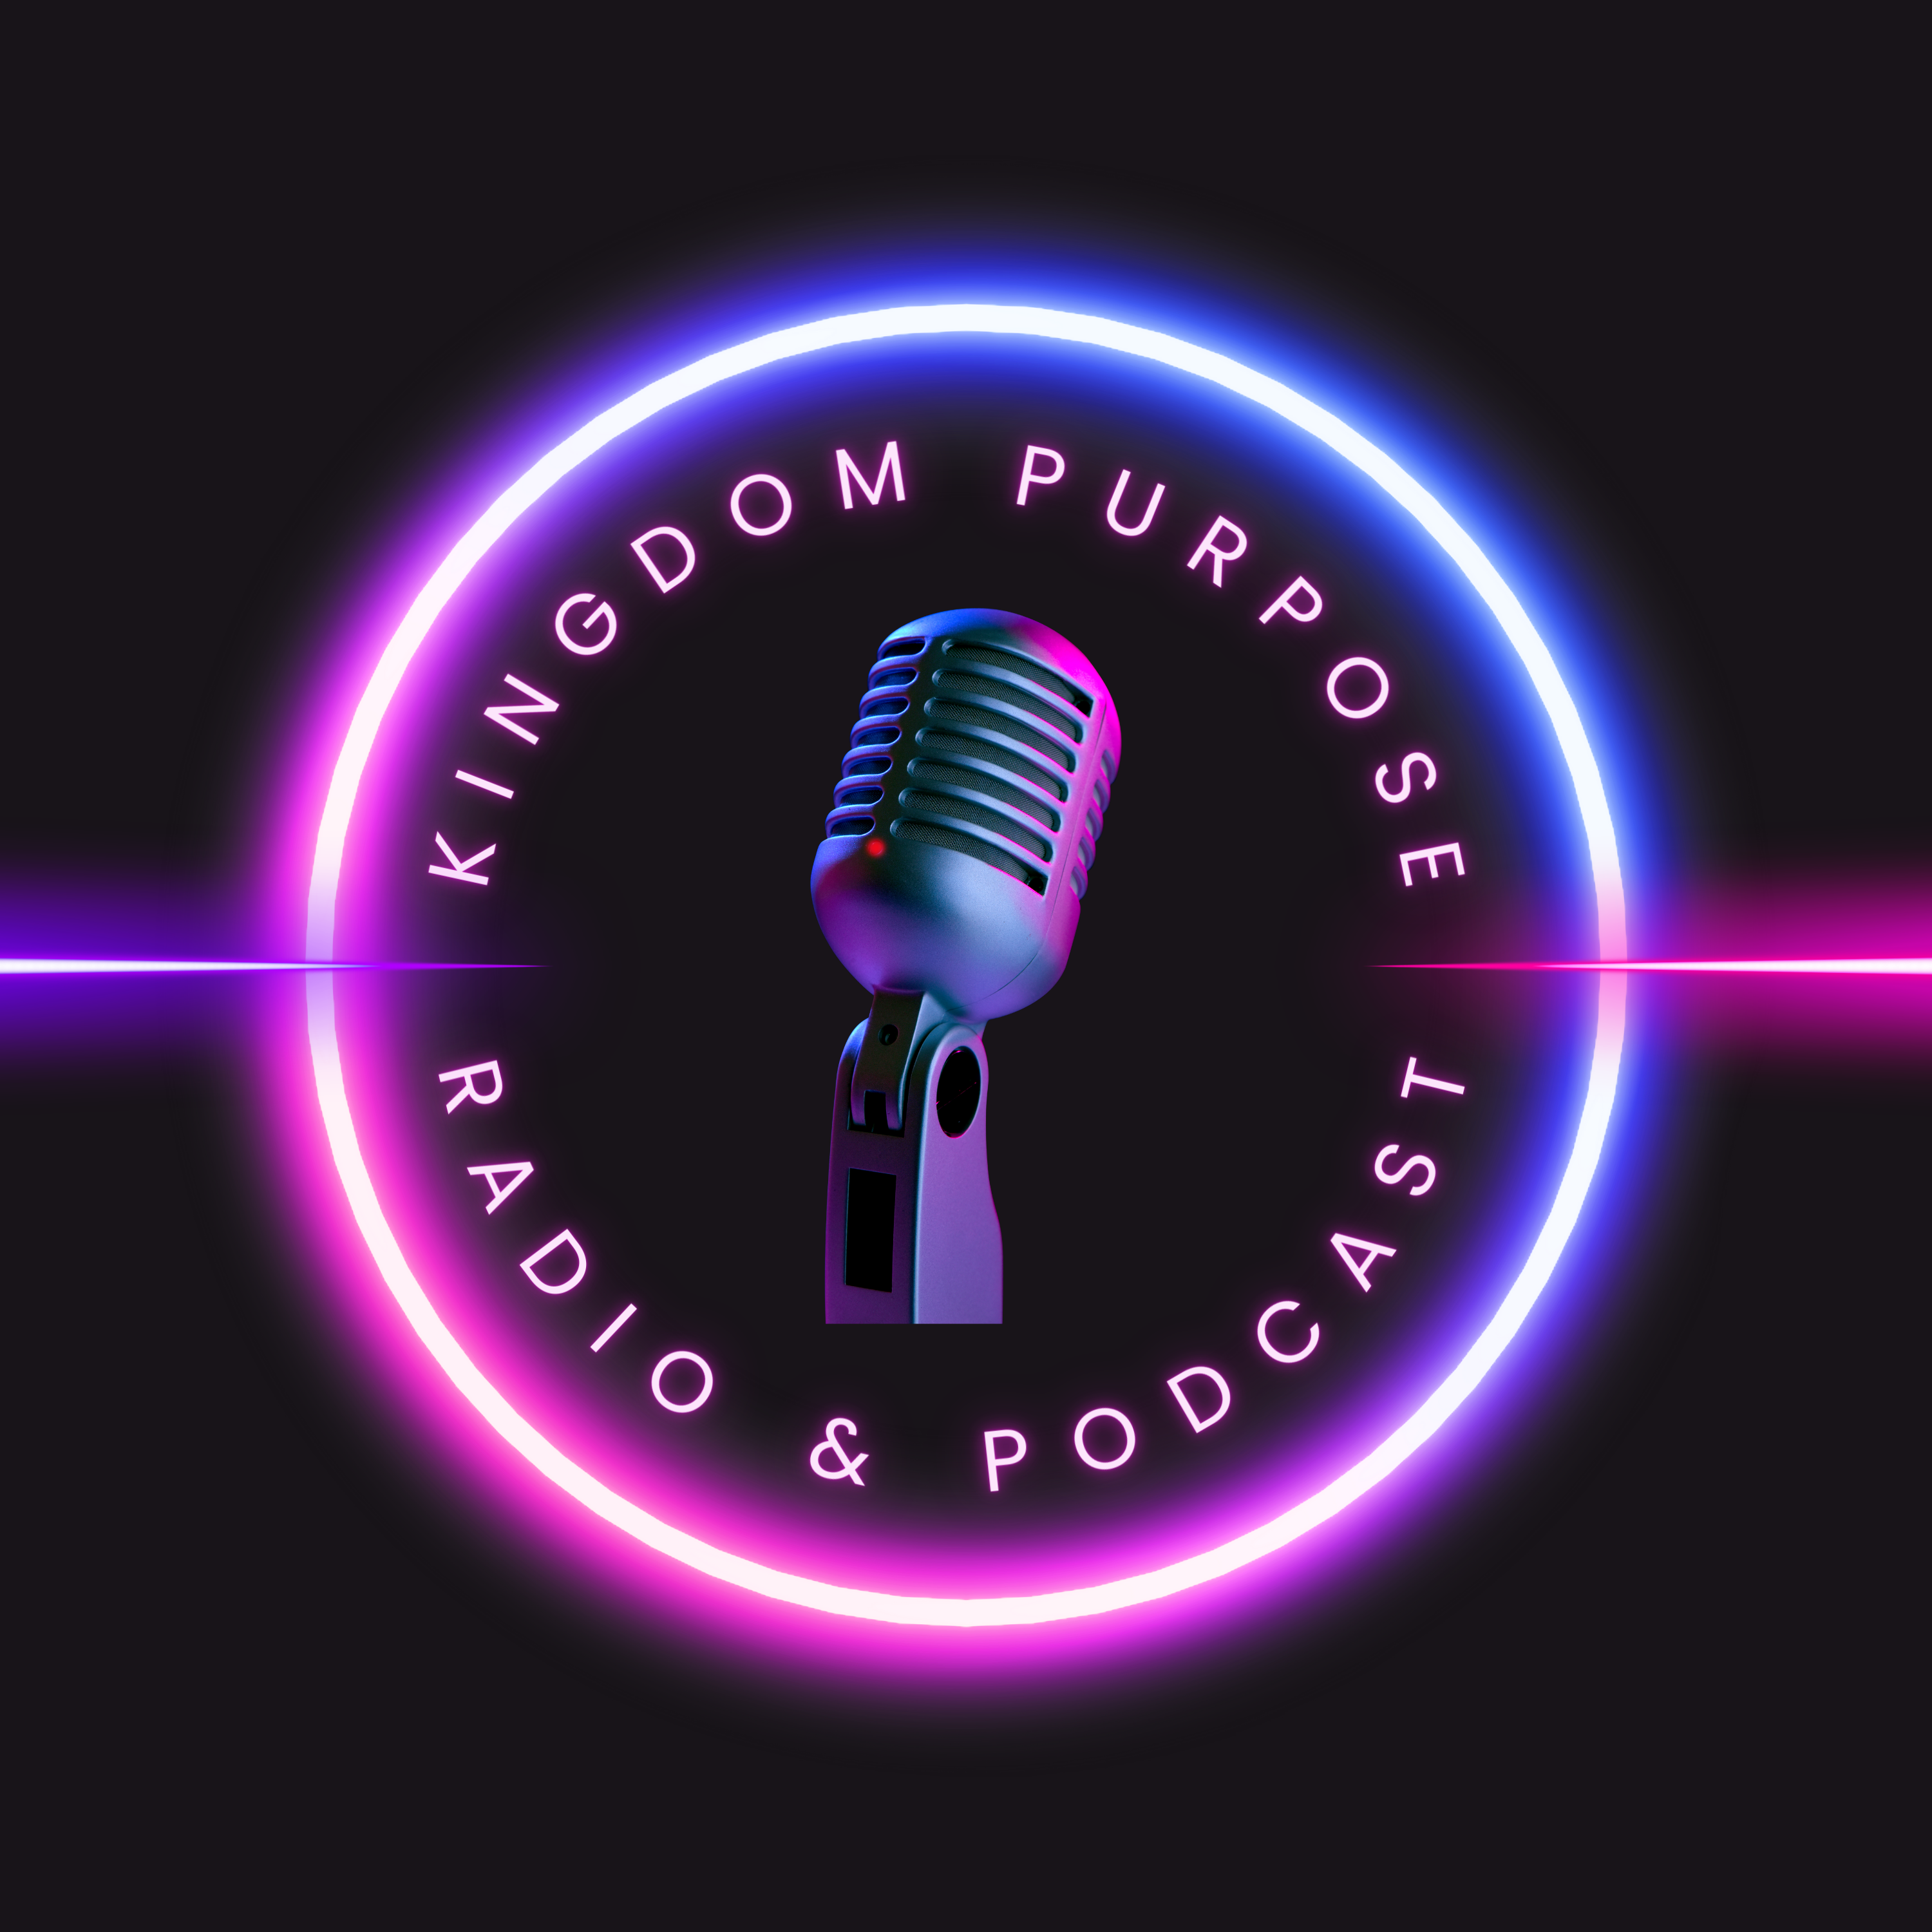 Kingdom Purpose Radio And Podcast